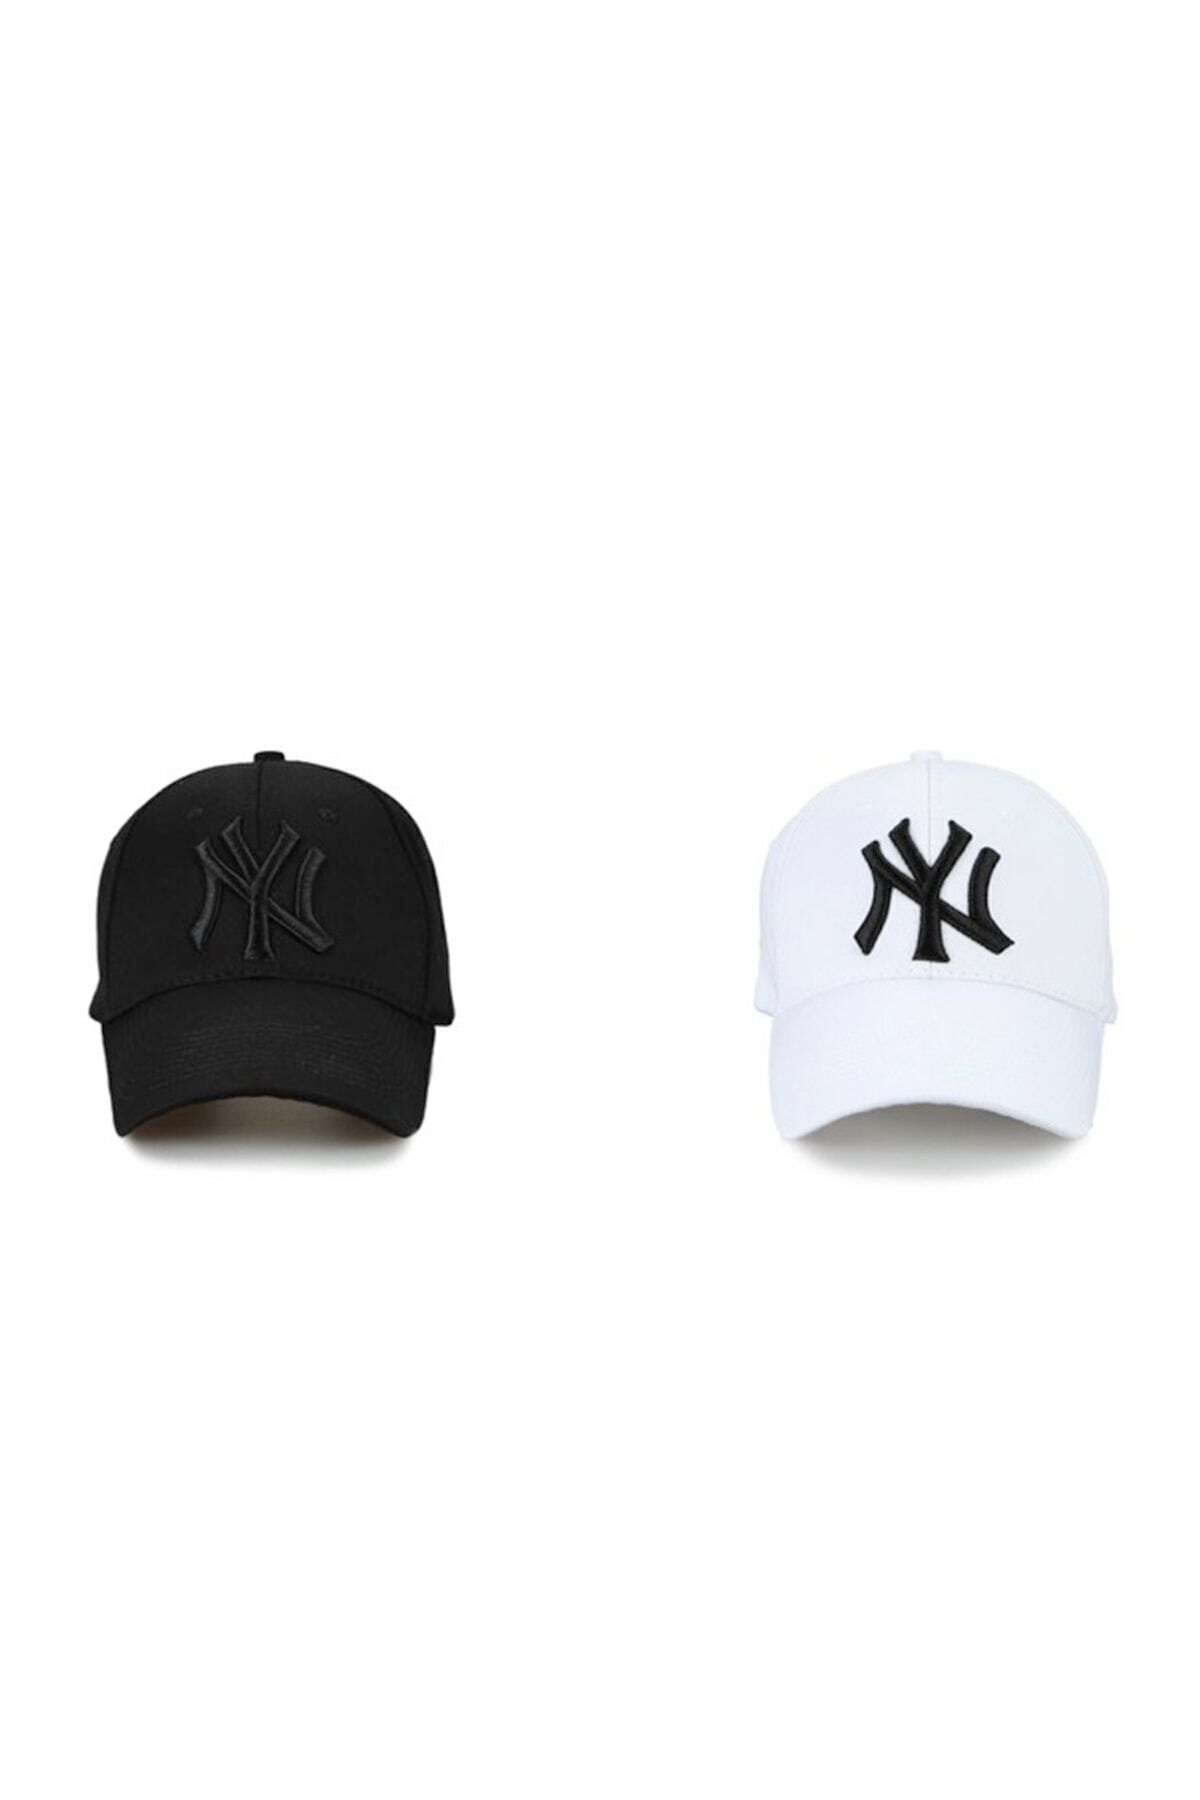 huma butik Ny New York 2'li Unisex Set Şapka 20121